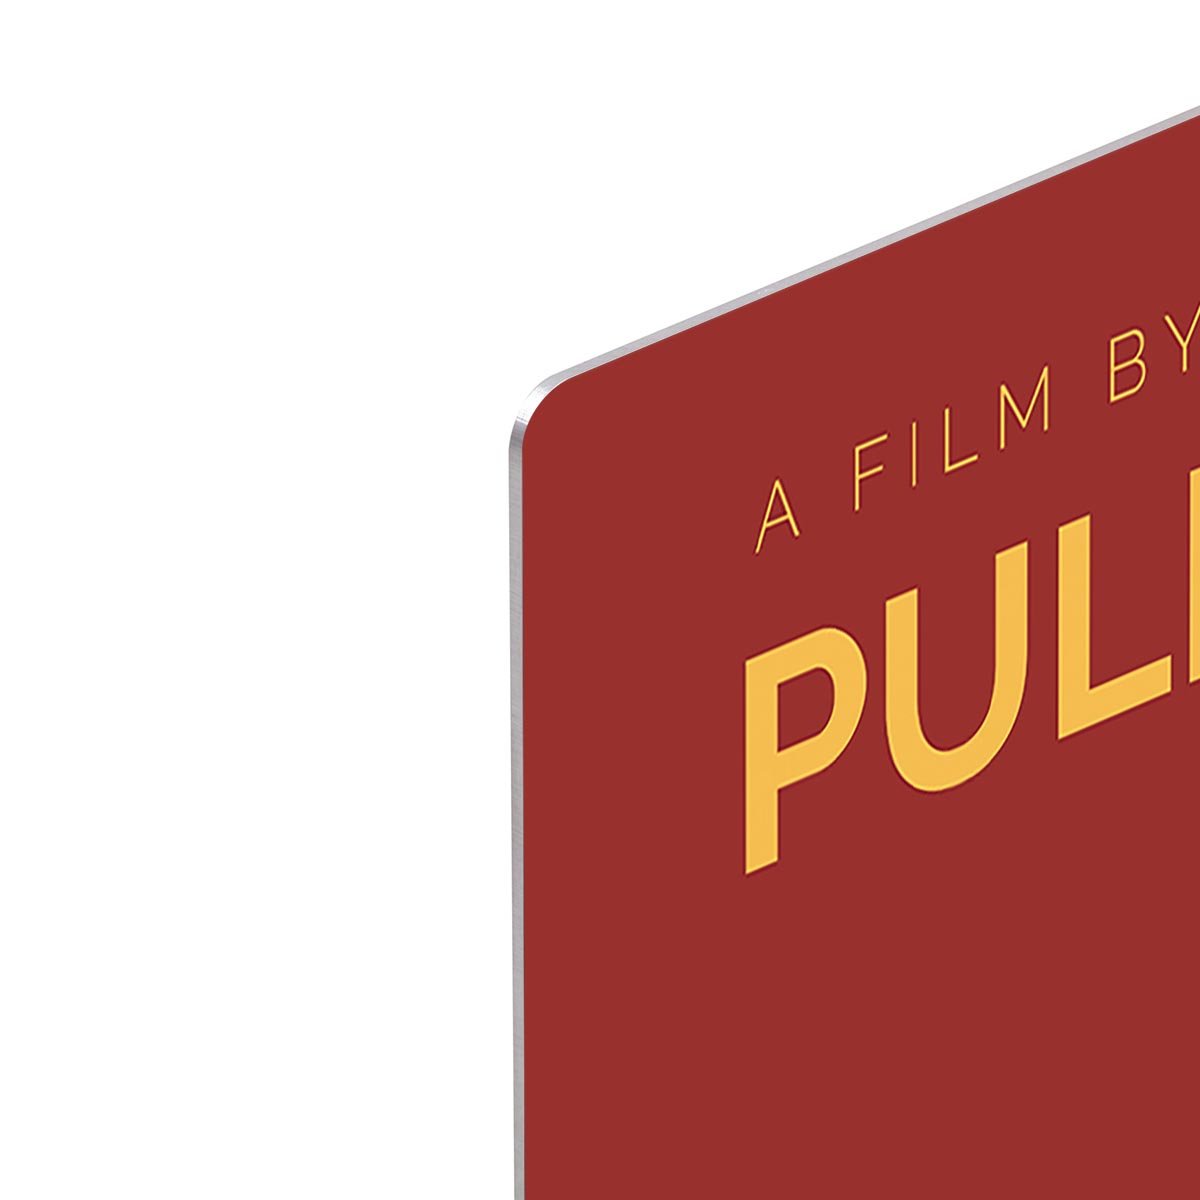 Pulp Fiction Burger Minimal Movie HD Metal Print